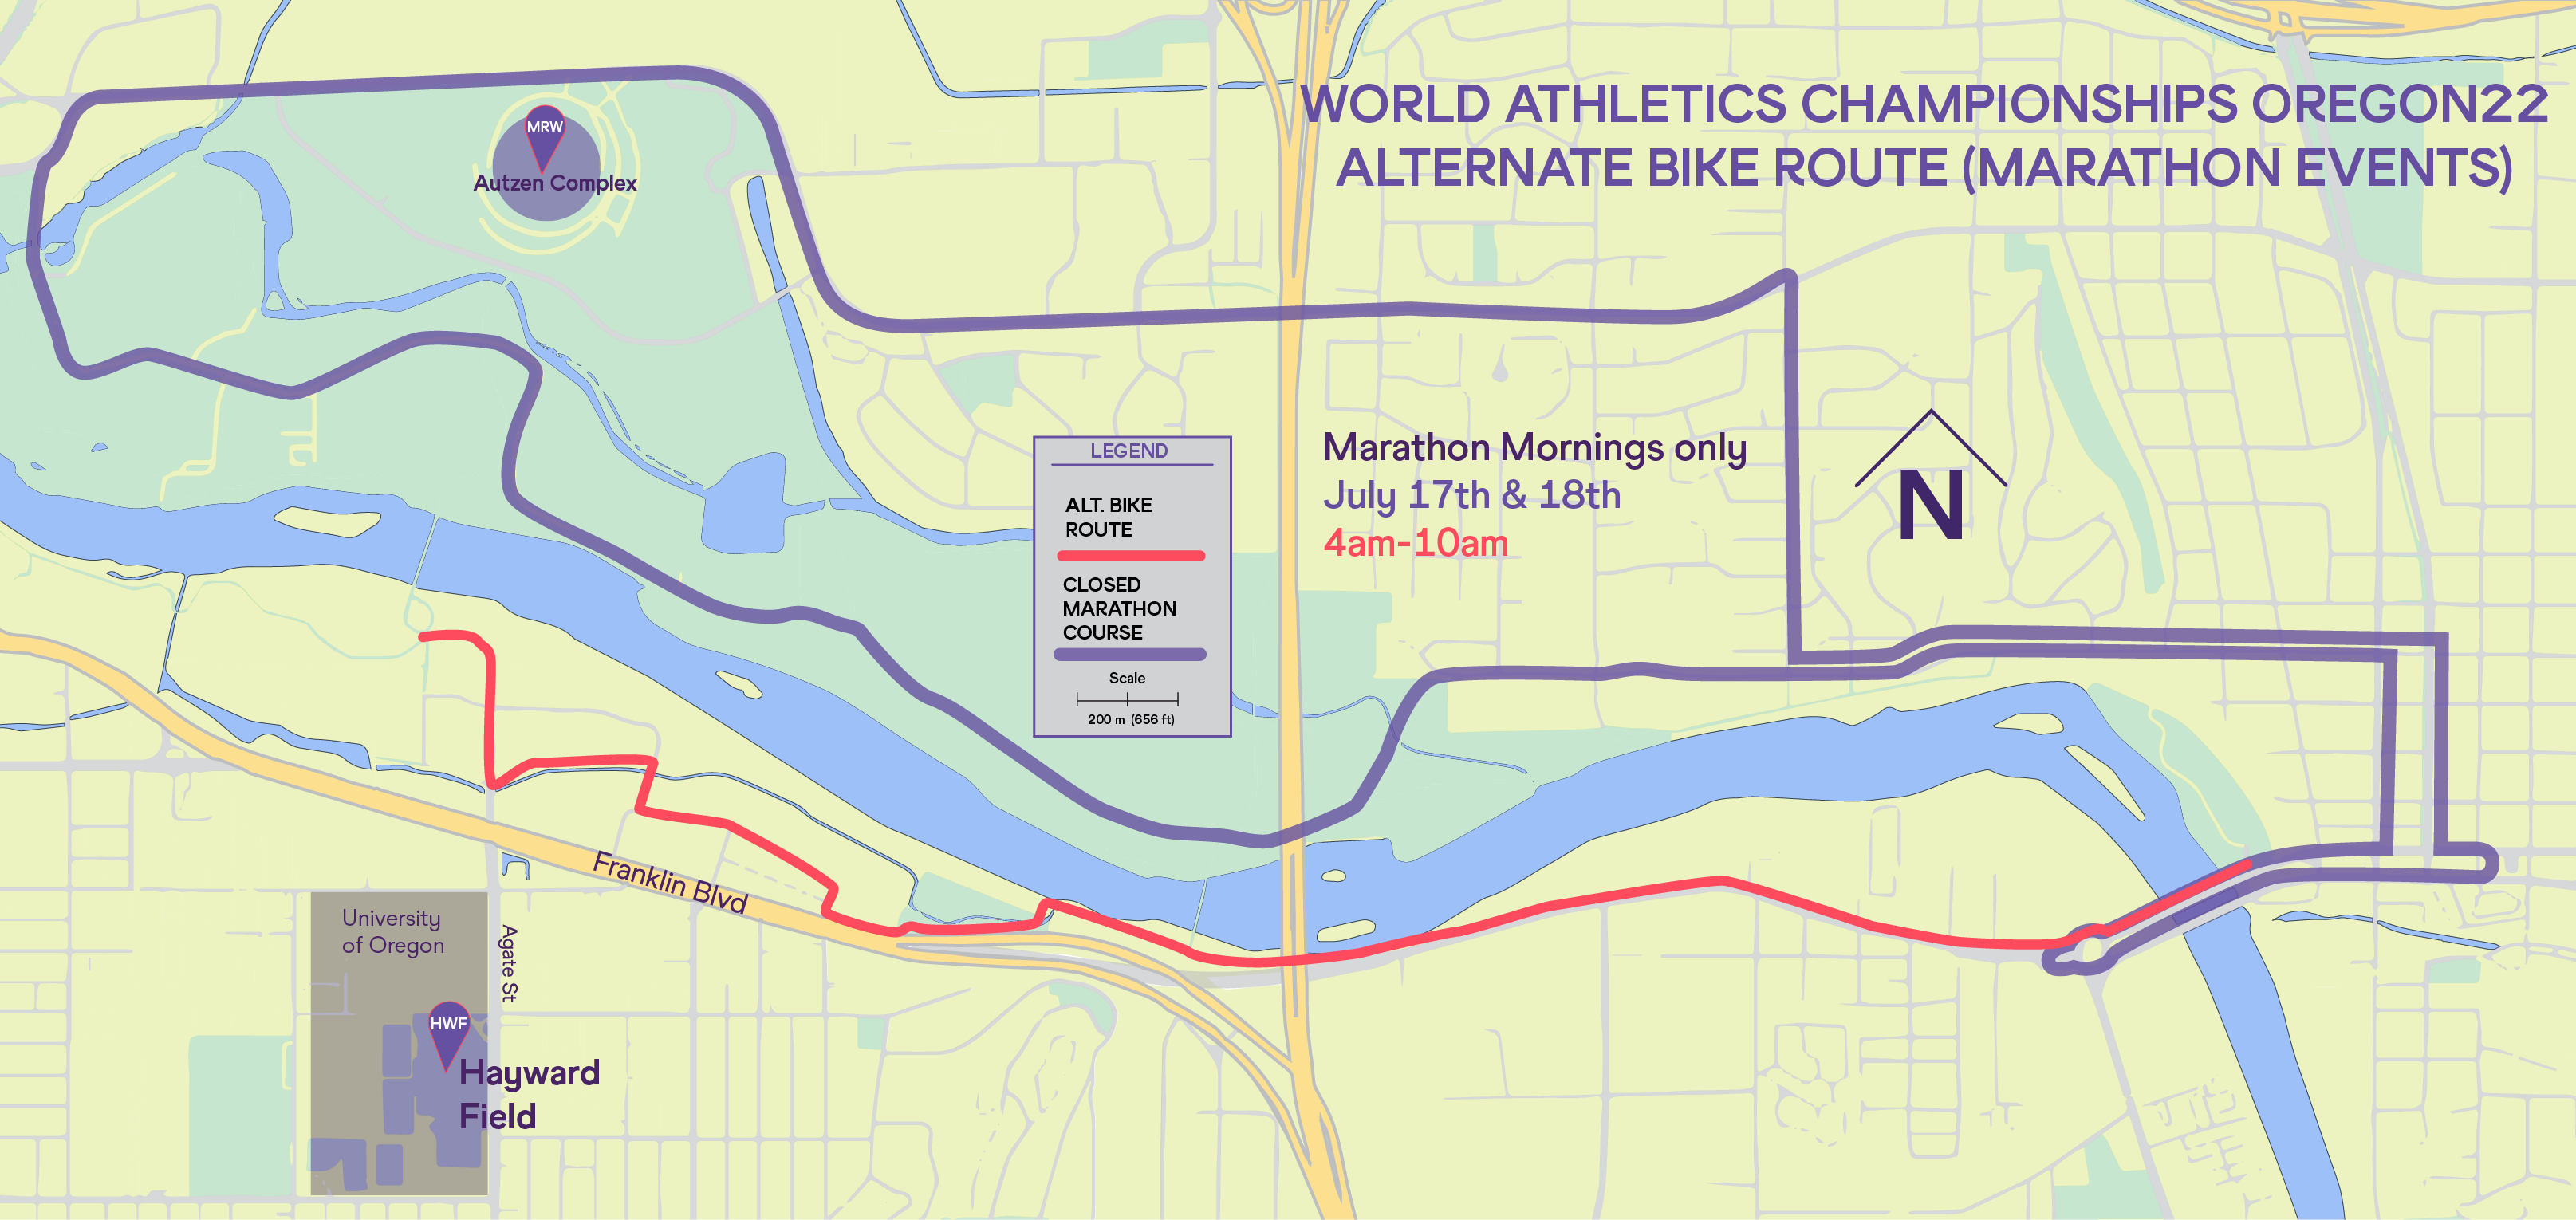 Alternative bike route for WCH Oregon22 Marathon events